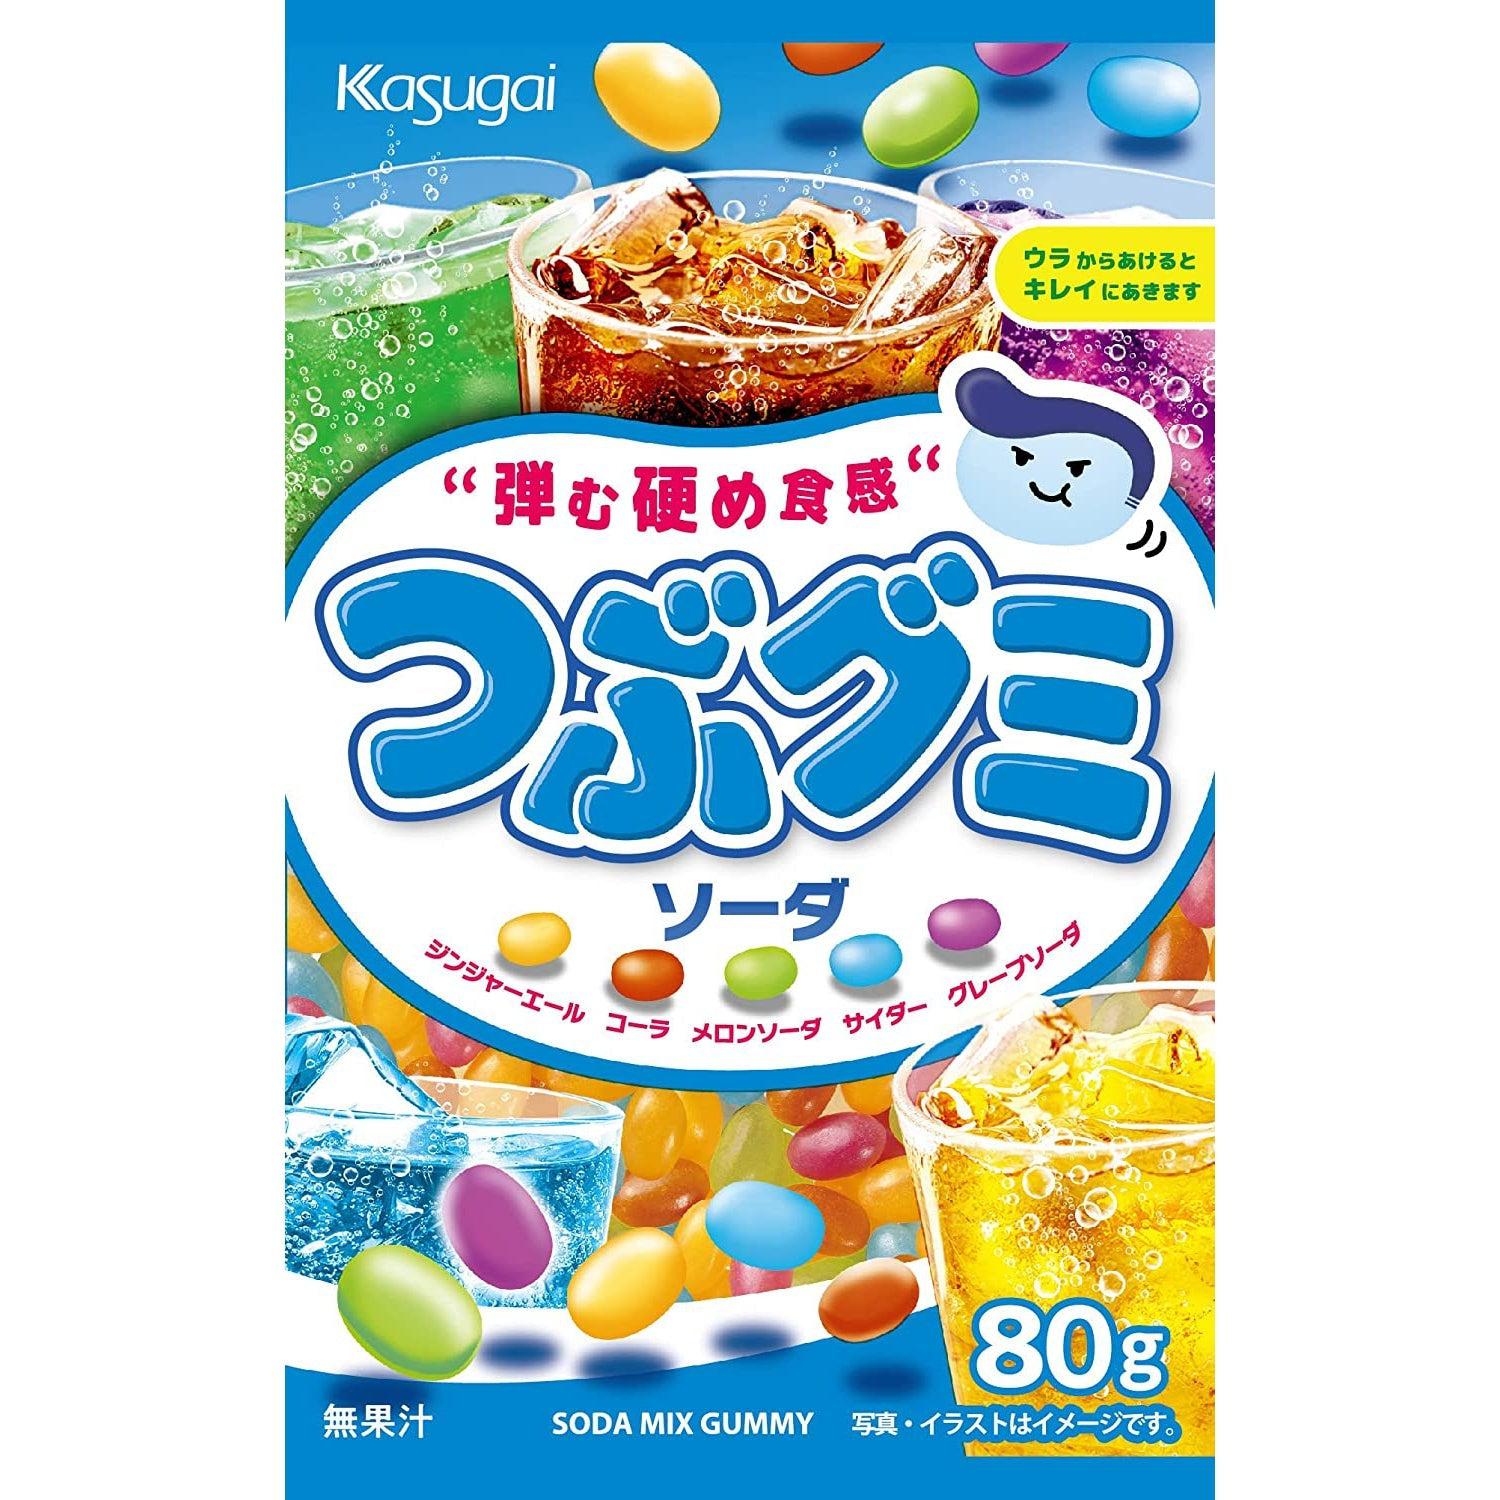 Kasugai Tsubu Gummy Mixed Soda Flavor Gummies 80g (Pack of 3)